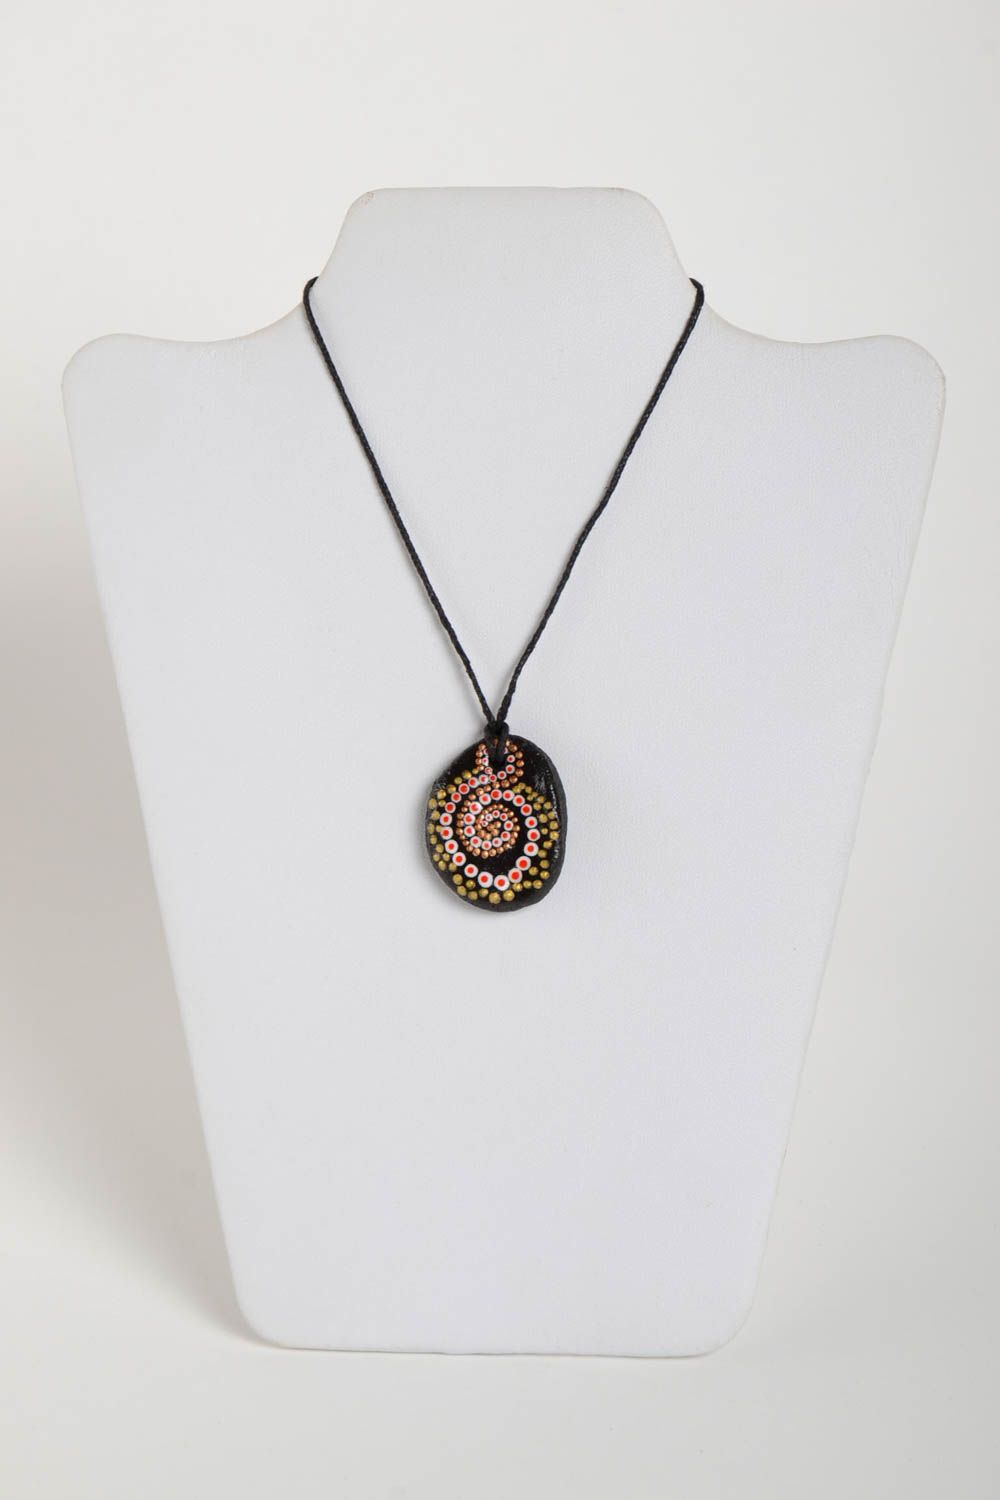 Handmade pendant designer pendant unusual accessory gift ideas gift fir girls photo 5